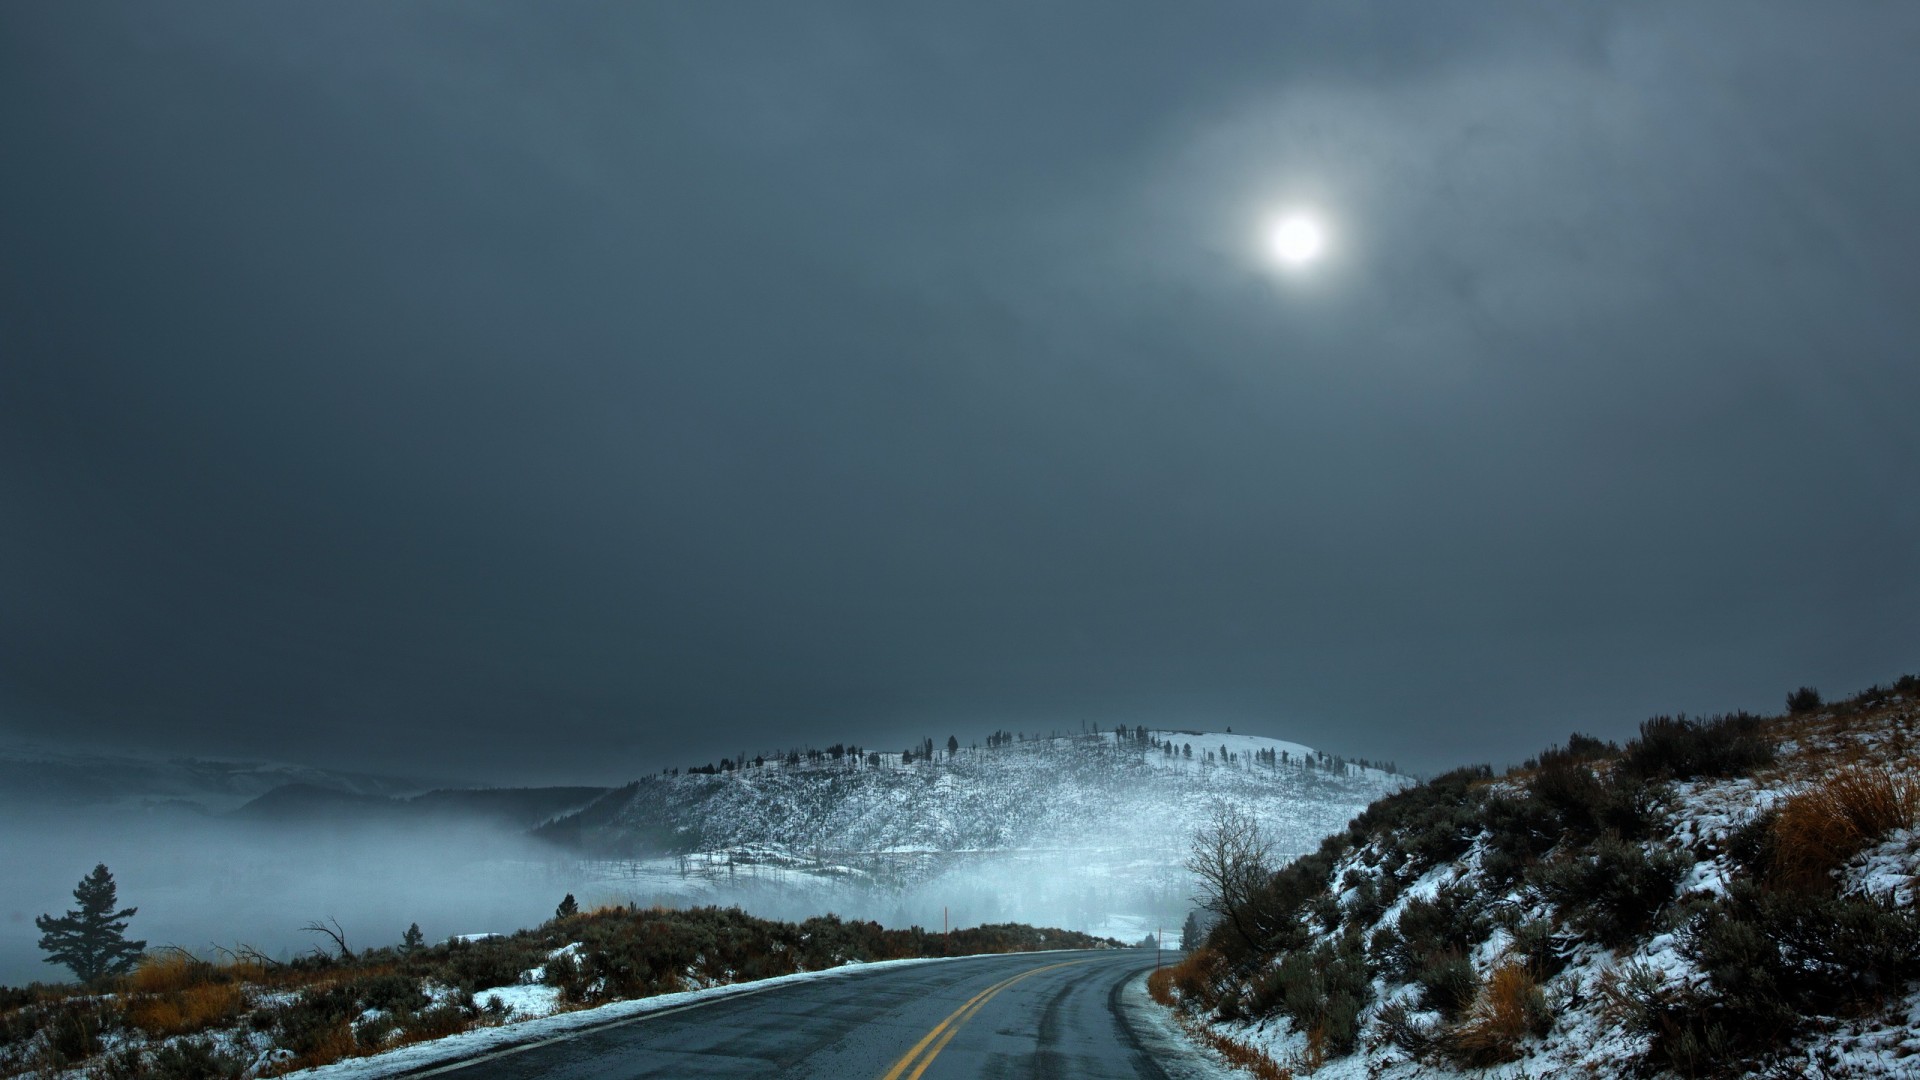 Download Wallpaper winter moon road night, 1920x Winter road under the dim moonlight